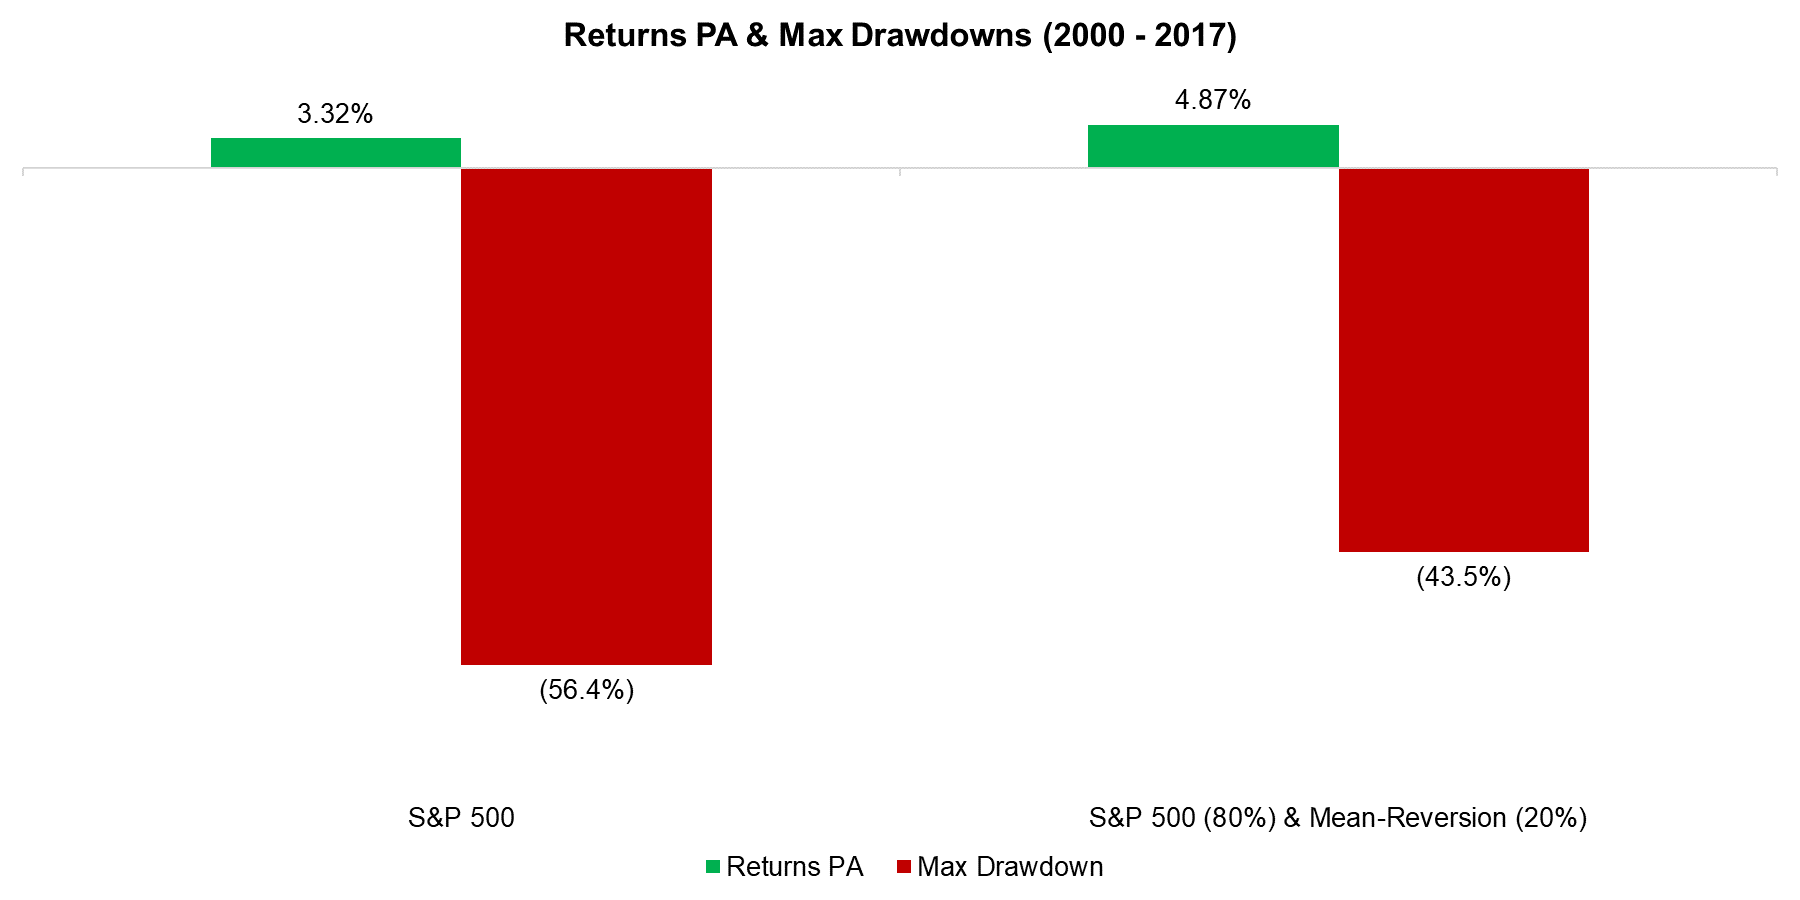 Returns PA & Max Drawdowns (2000 - 2017)